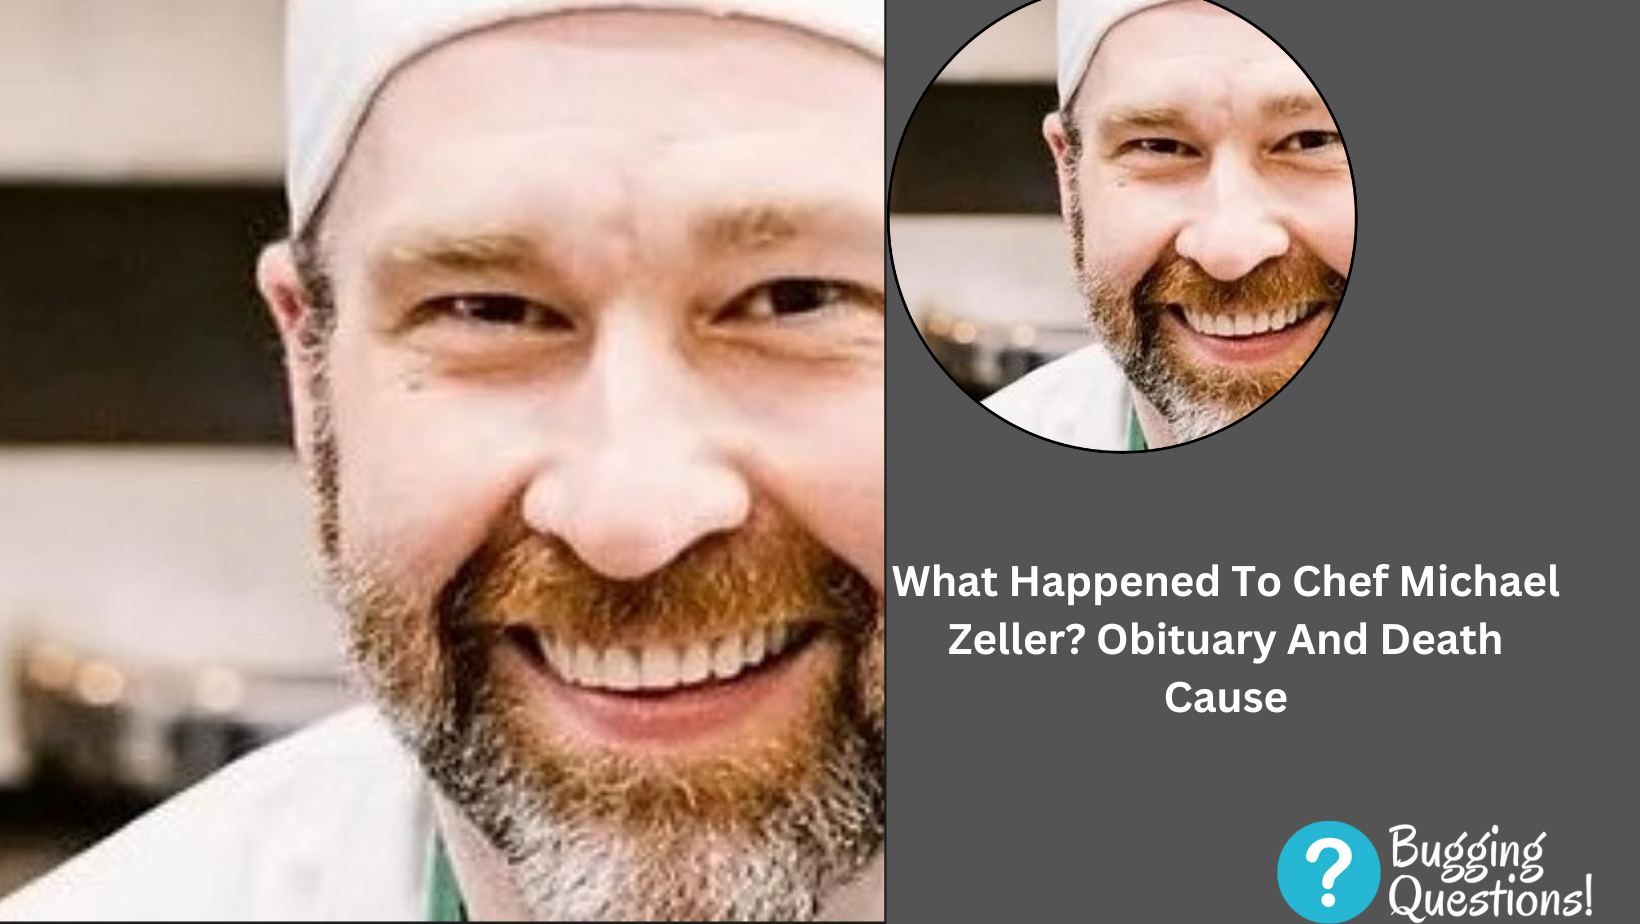 What Happened To Chef Michael Zeller?